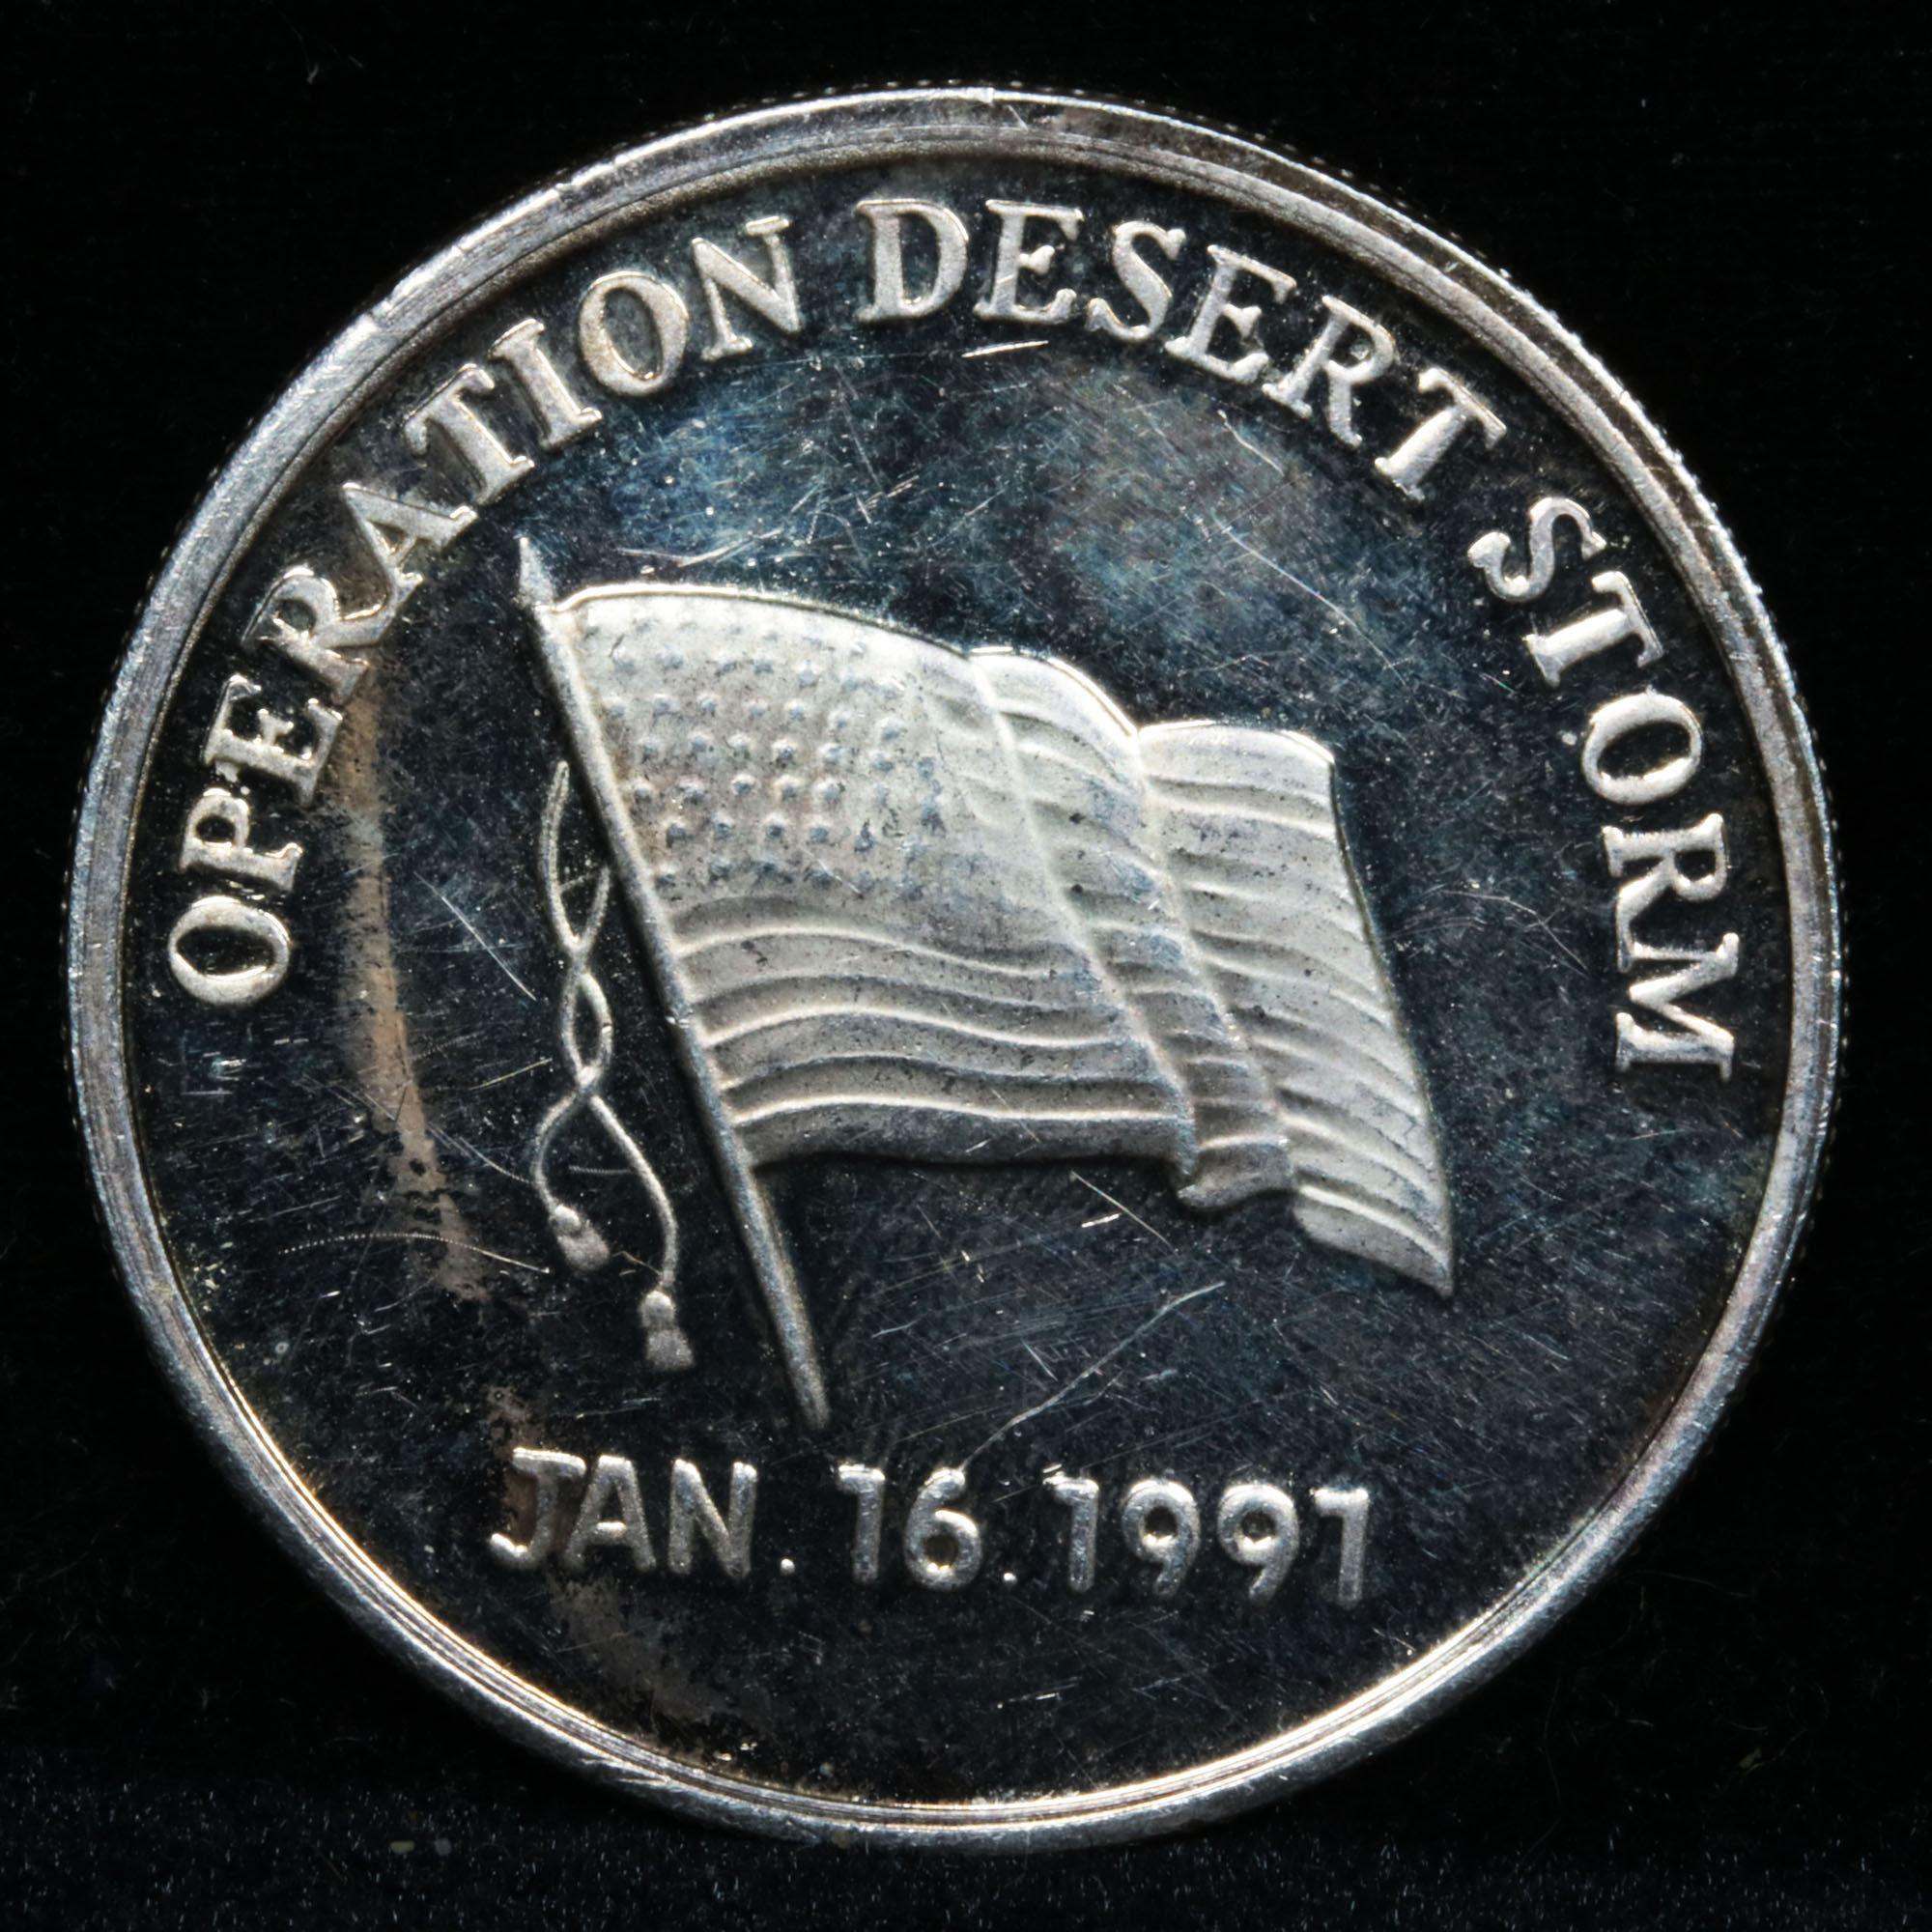 1 ounce .999 fine Silver Round Desert Storm Tribute Design